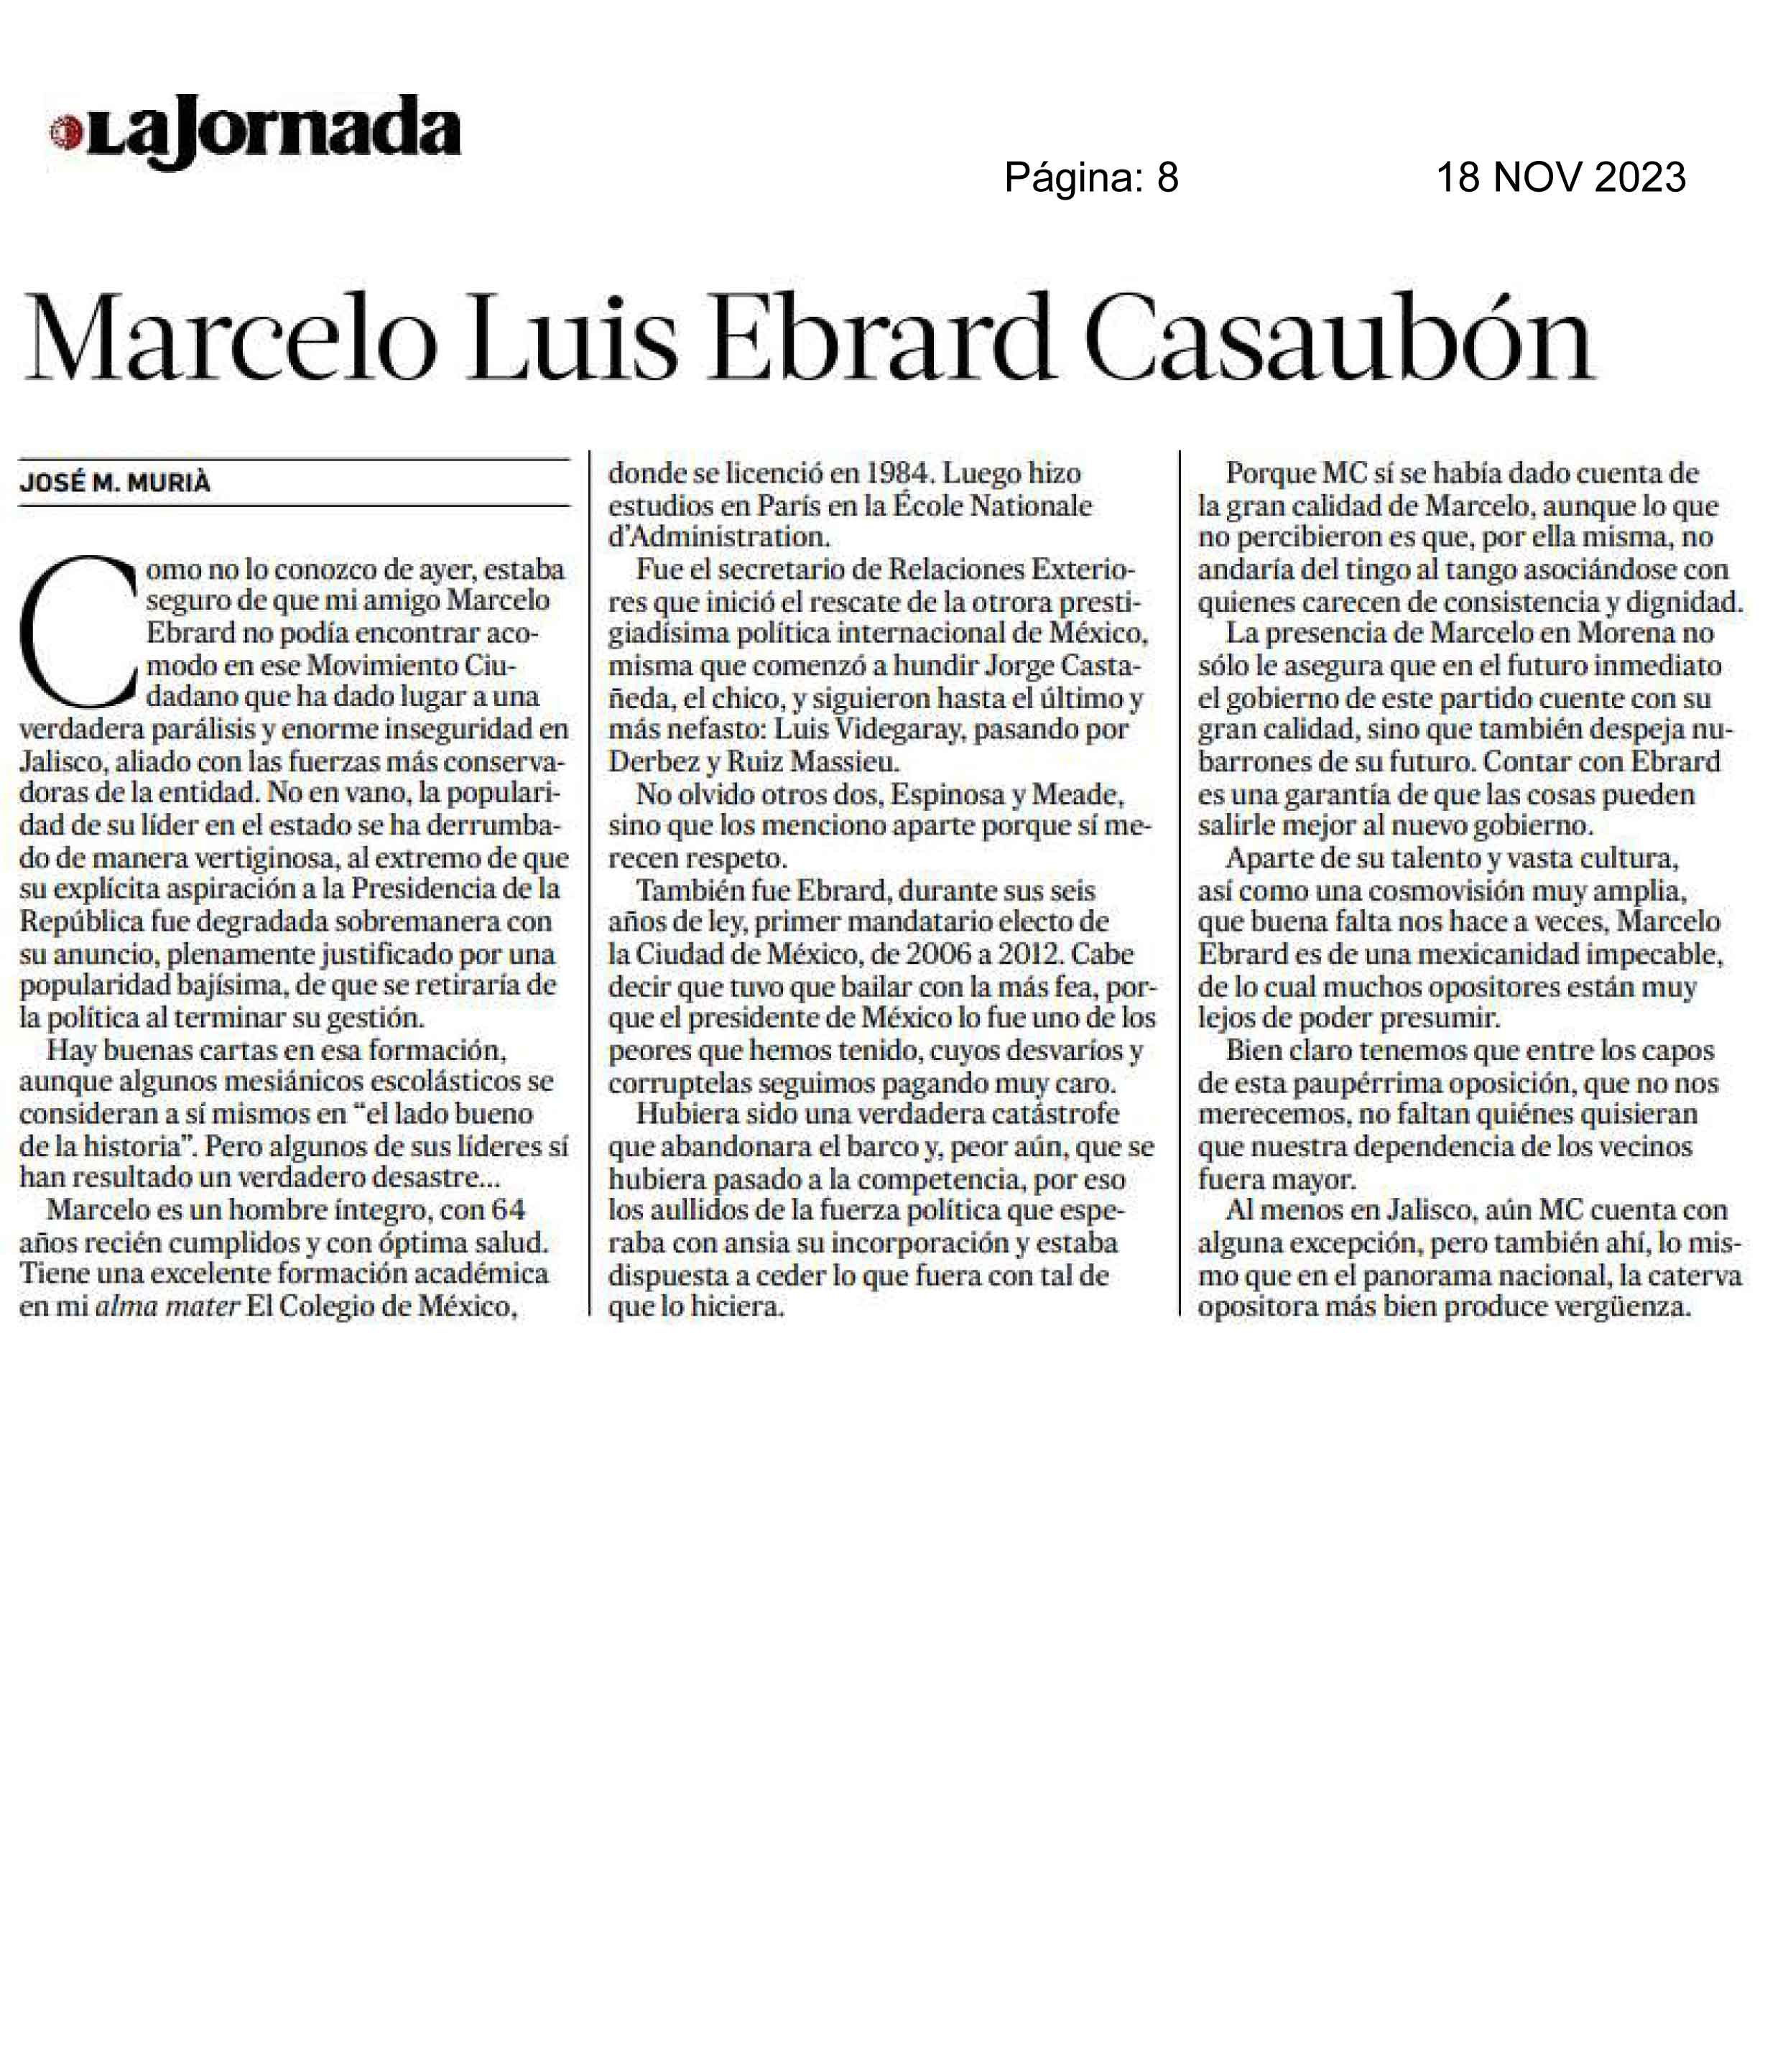 Marcelo Luis Ebrard Casaubón